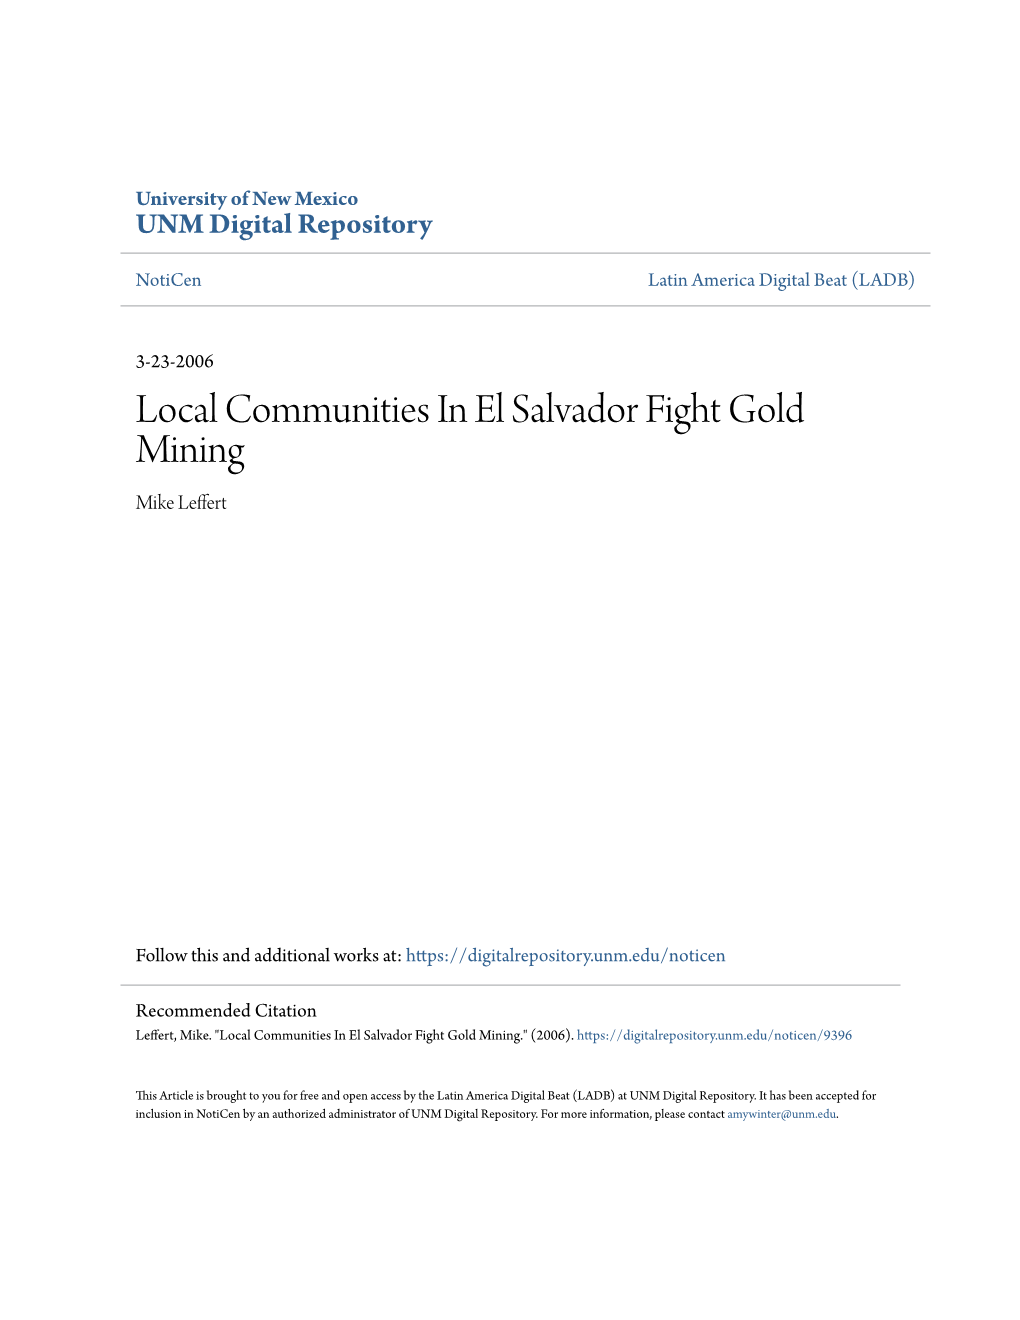 Local Communities in El Salvador Fight Gold Mining Mike Leffert